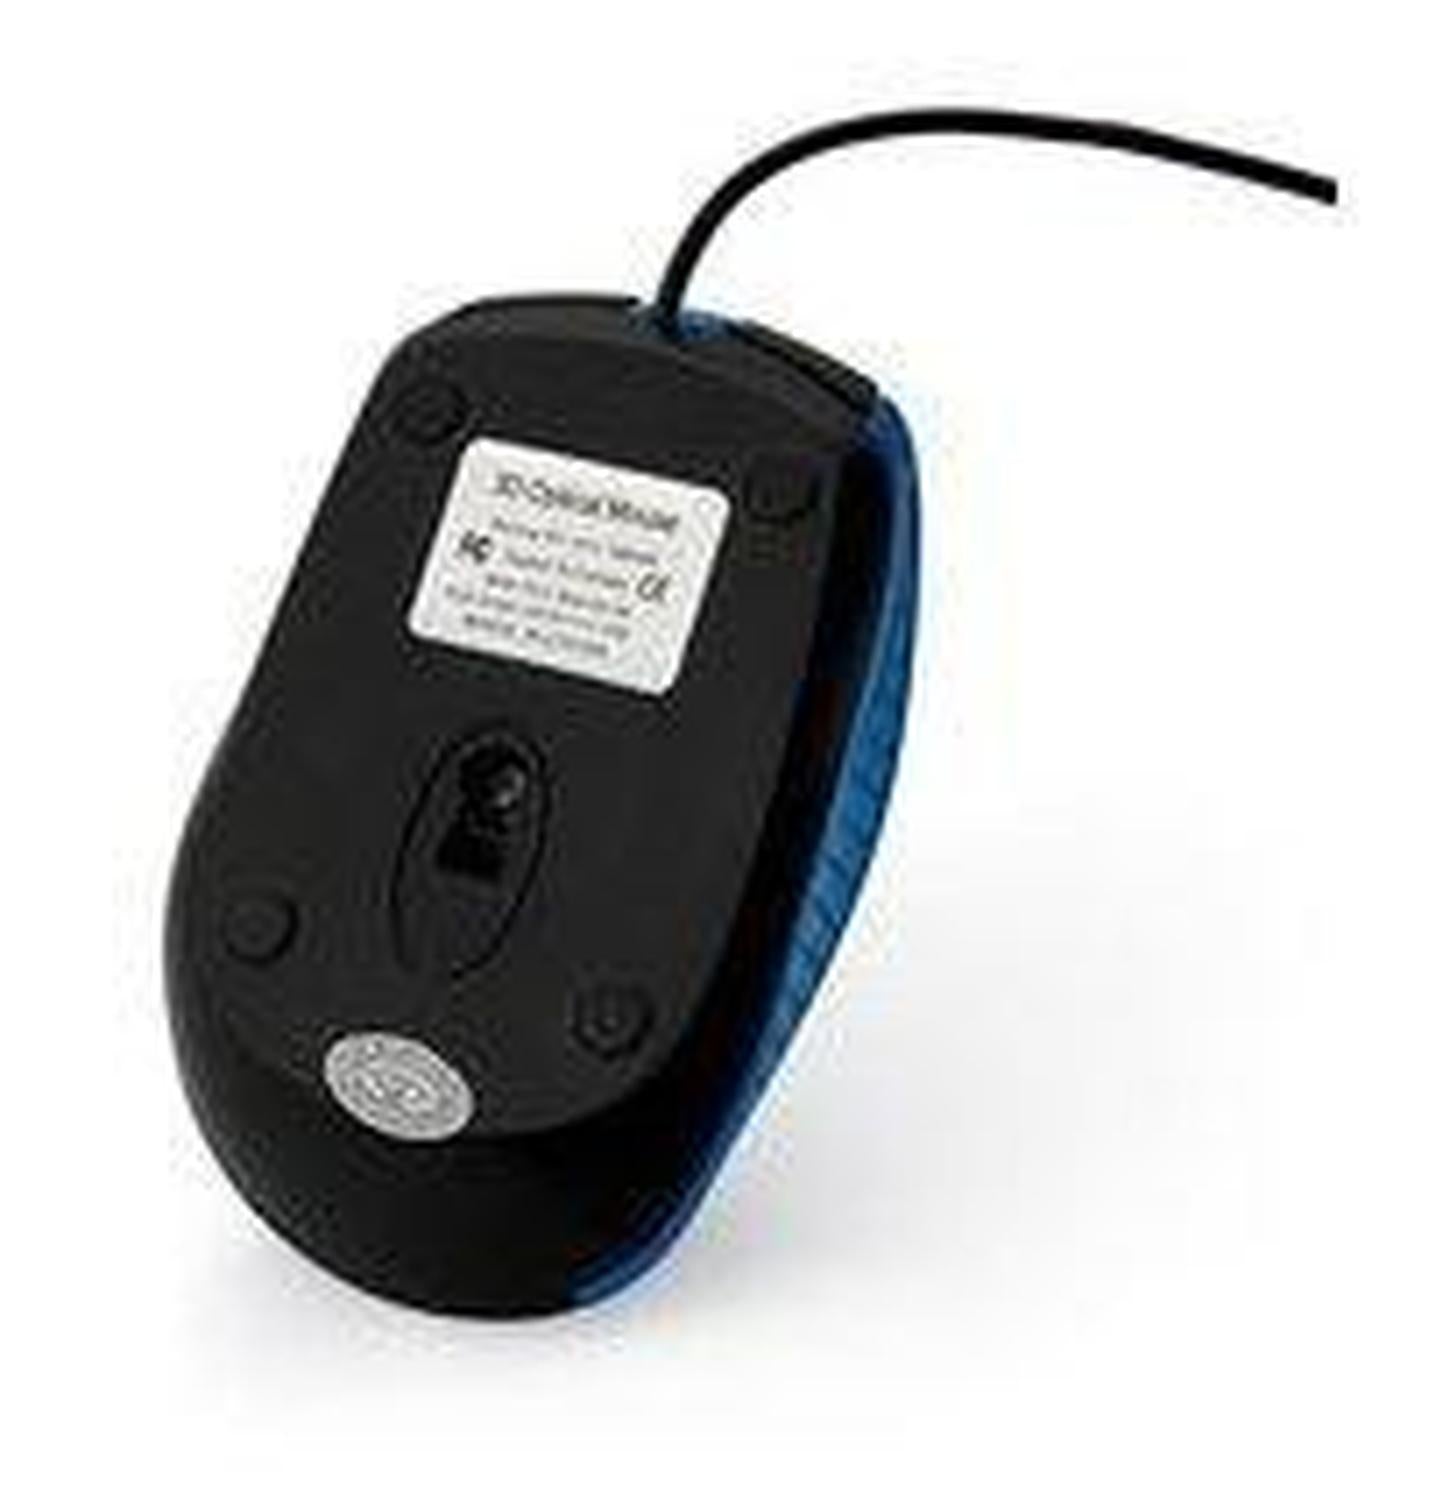 Mouse Verbatim Óptico Bravo, Alámbrico, USB, Negro/Azul